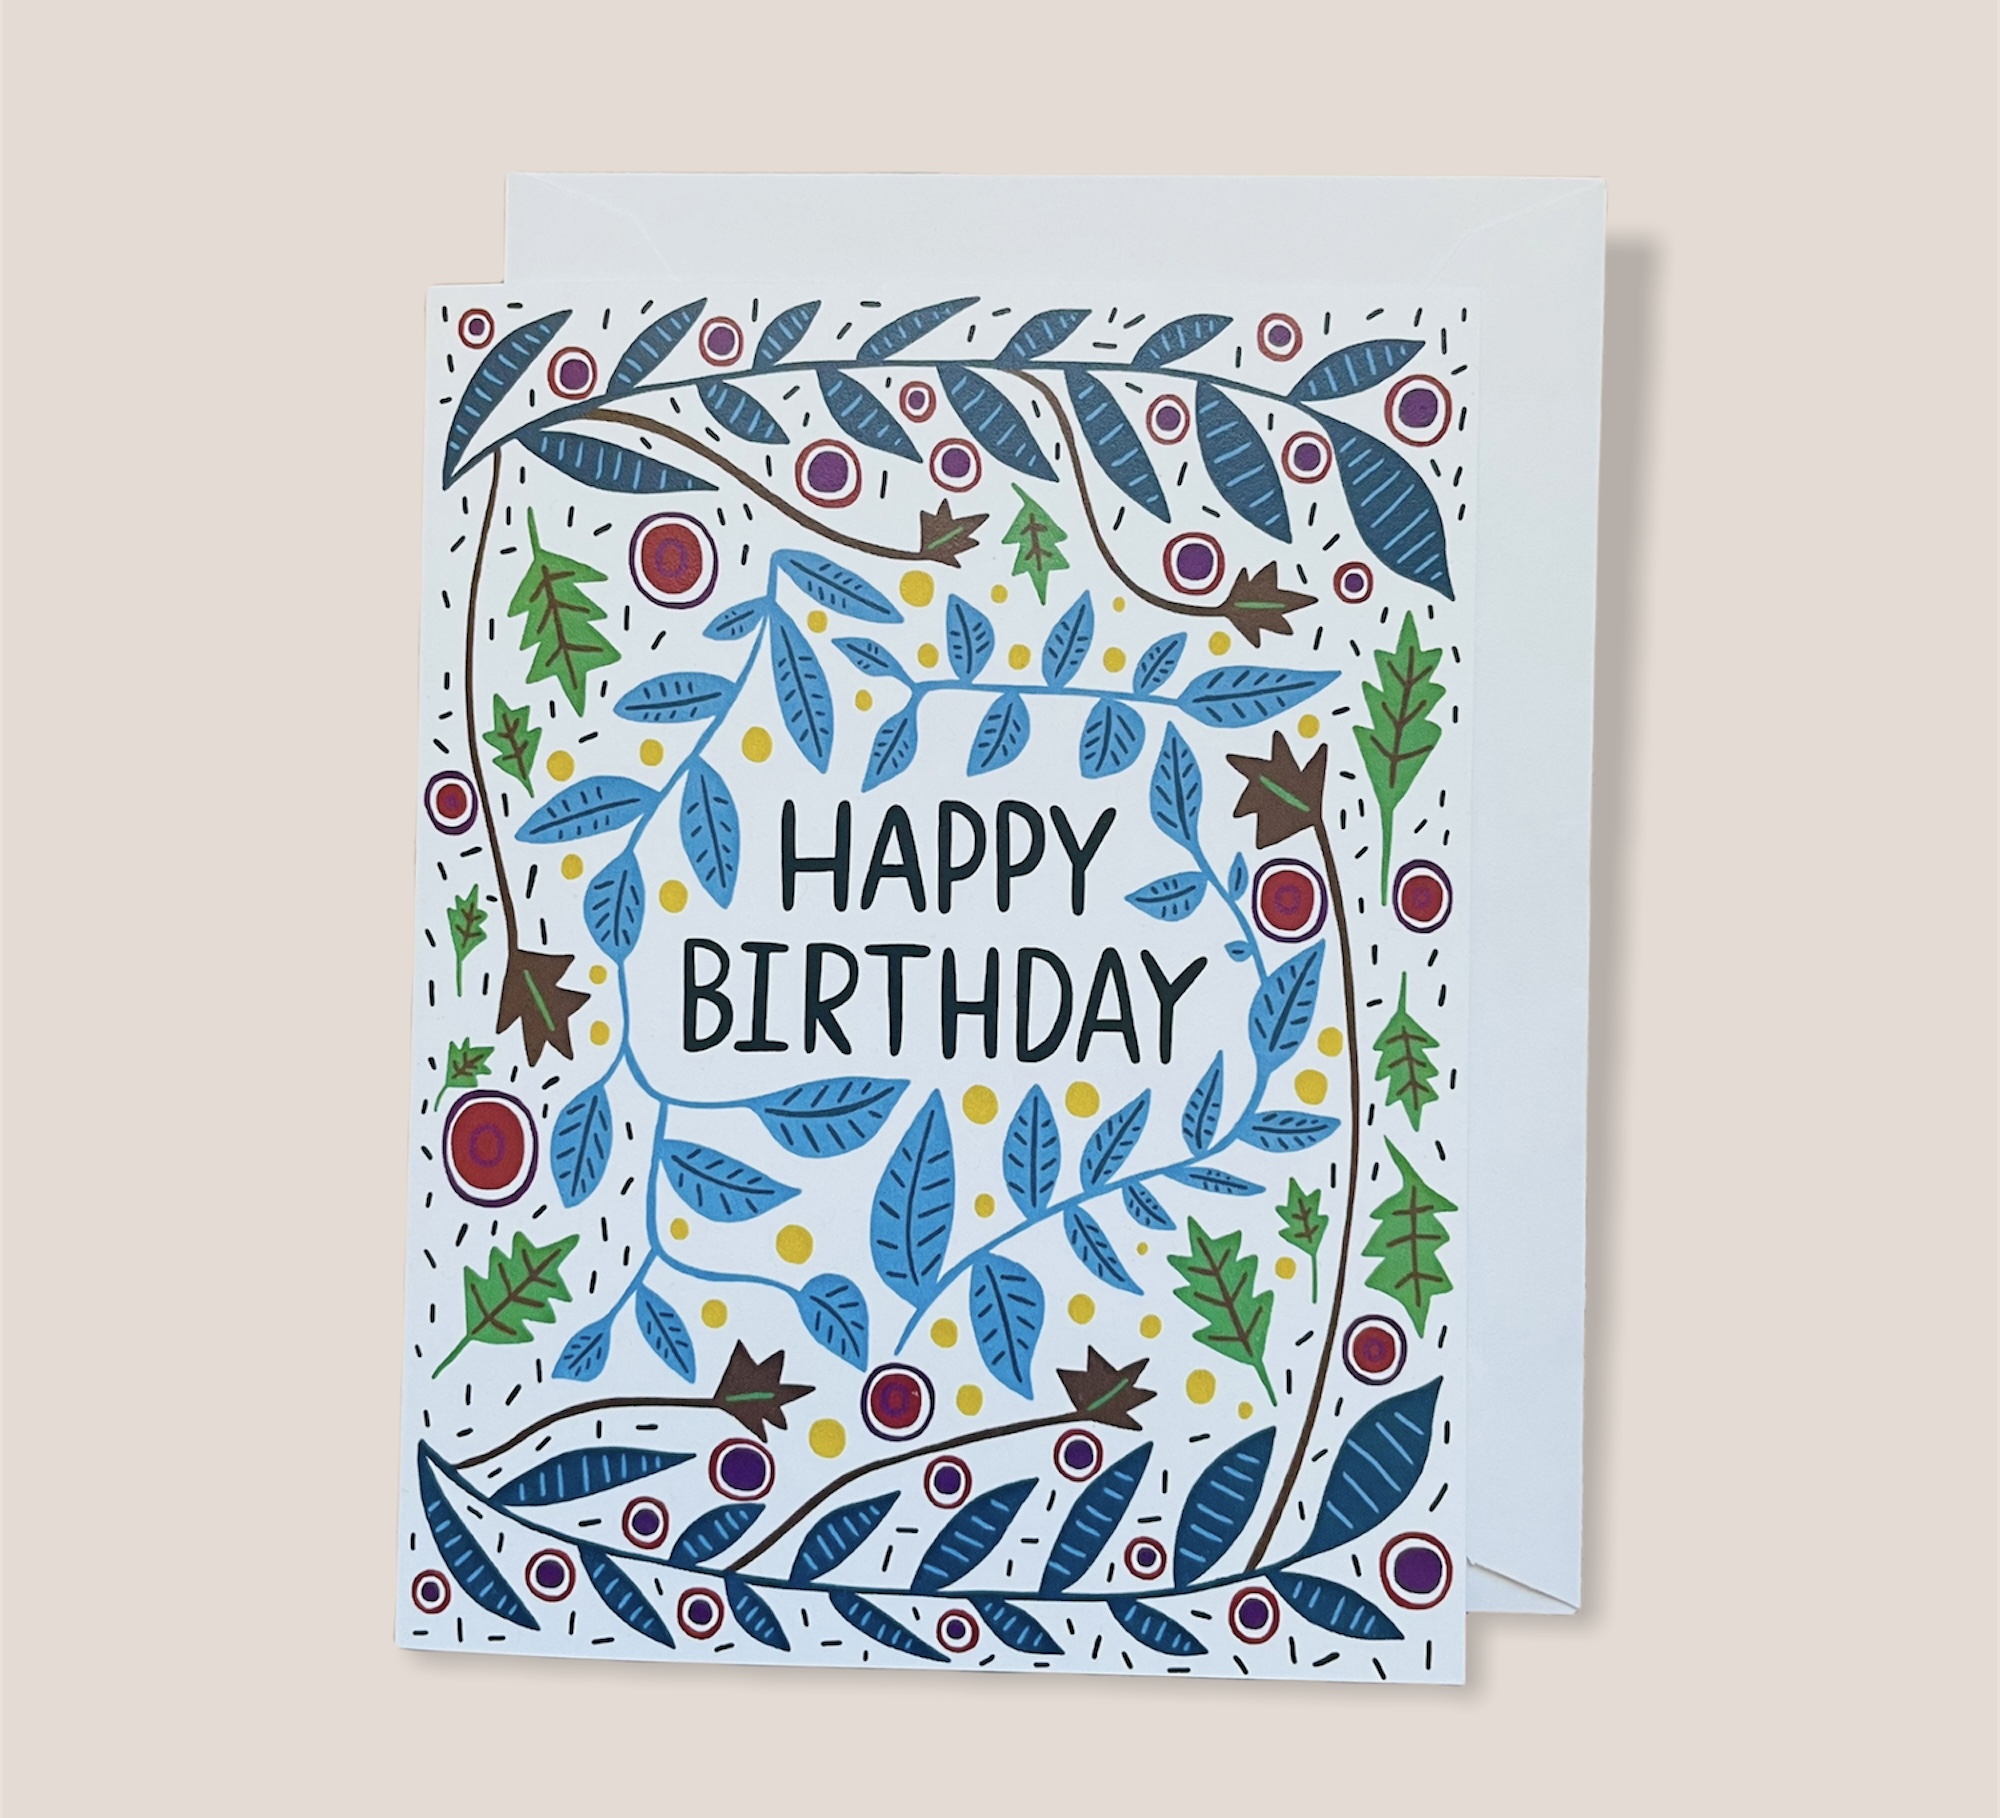 beautiful birthday greeting cards designs